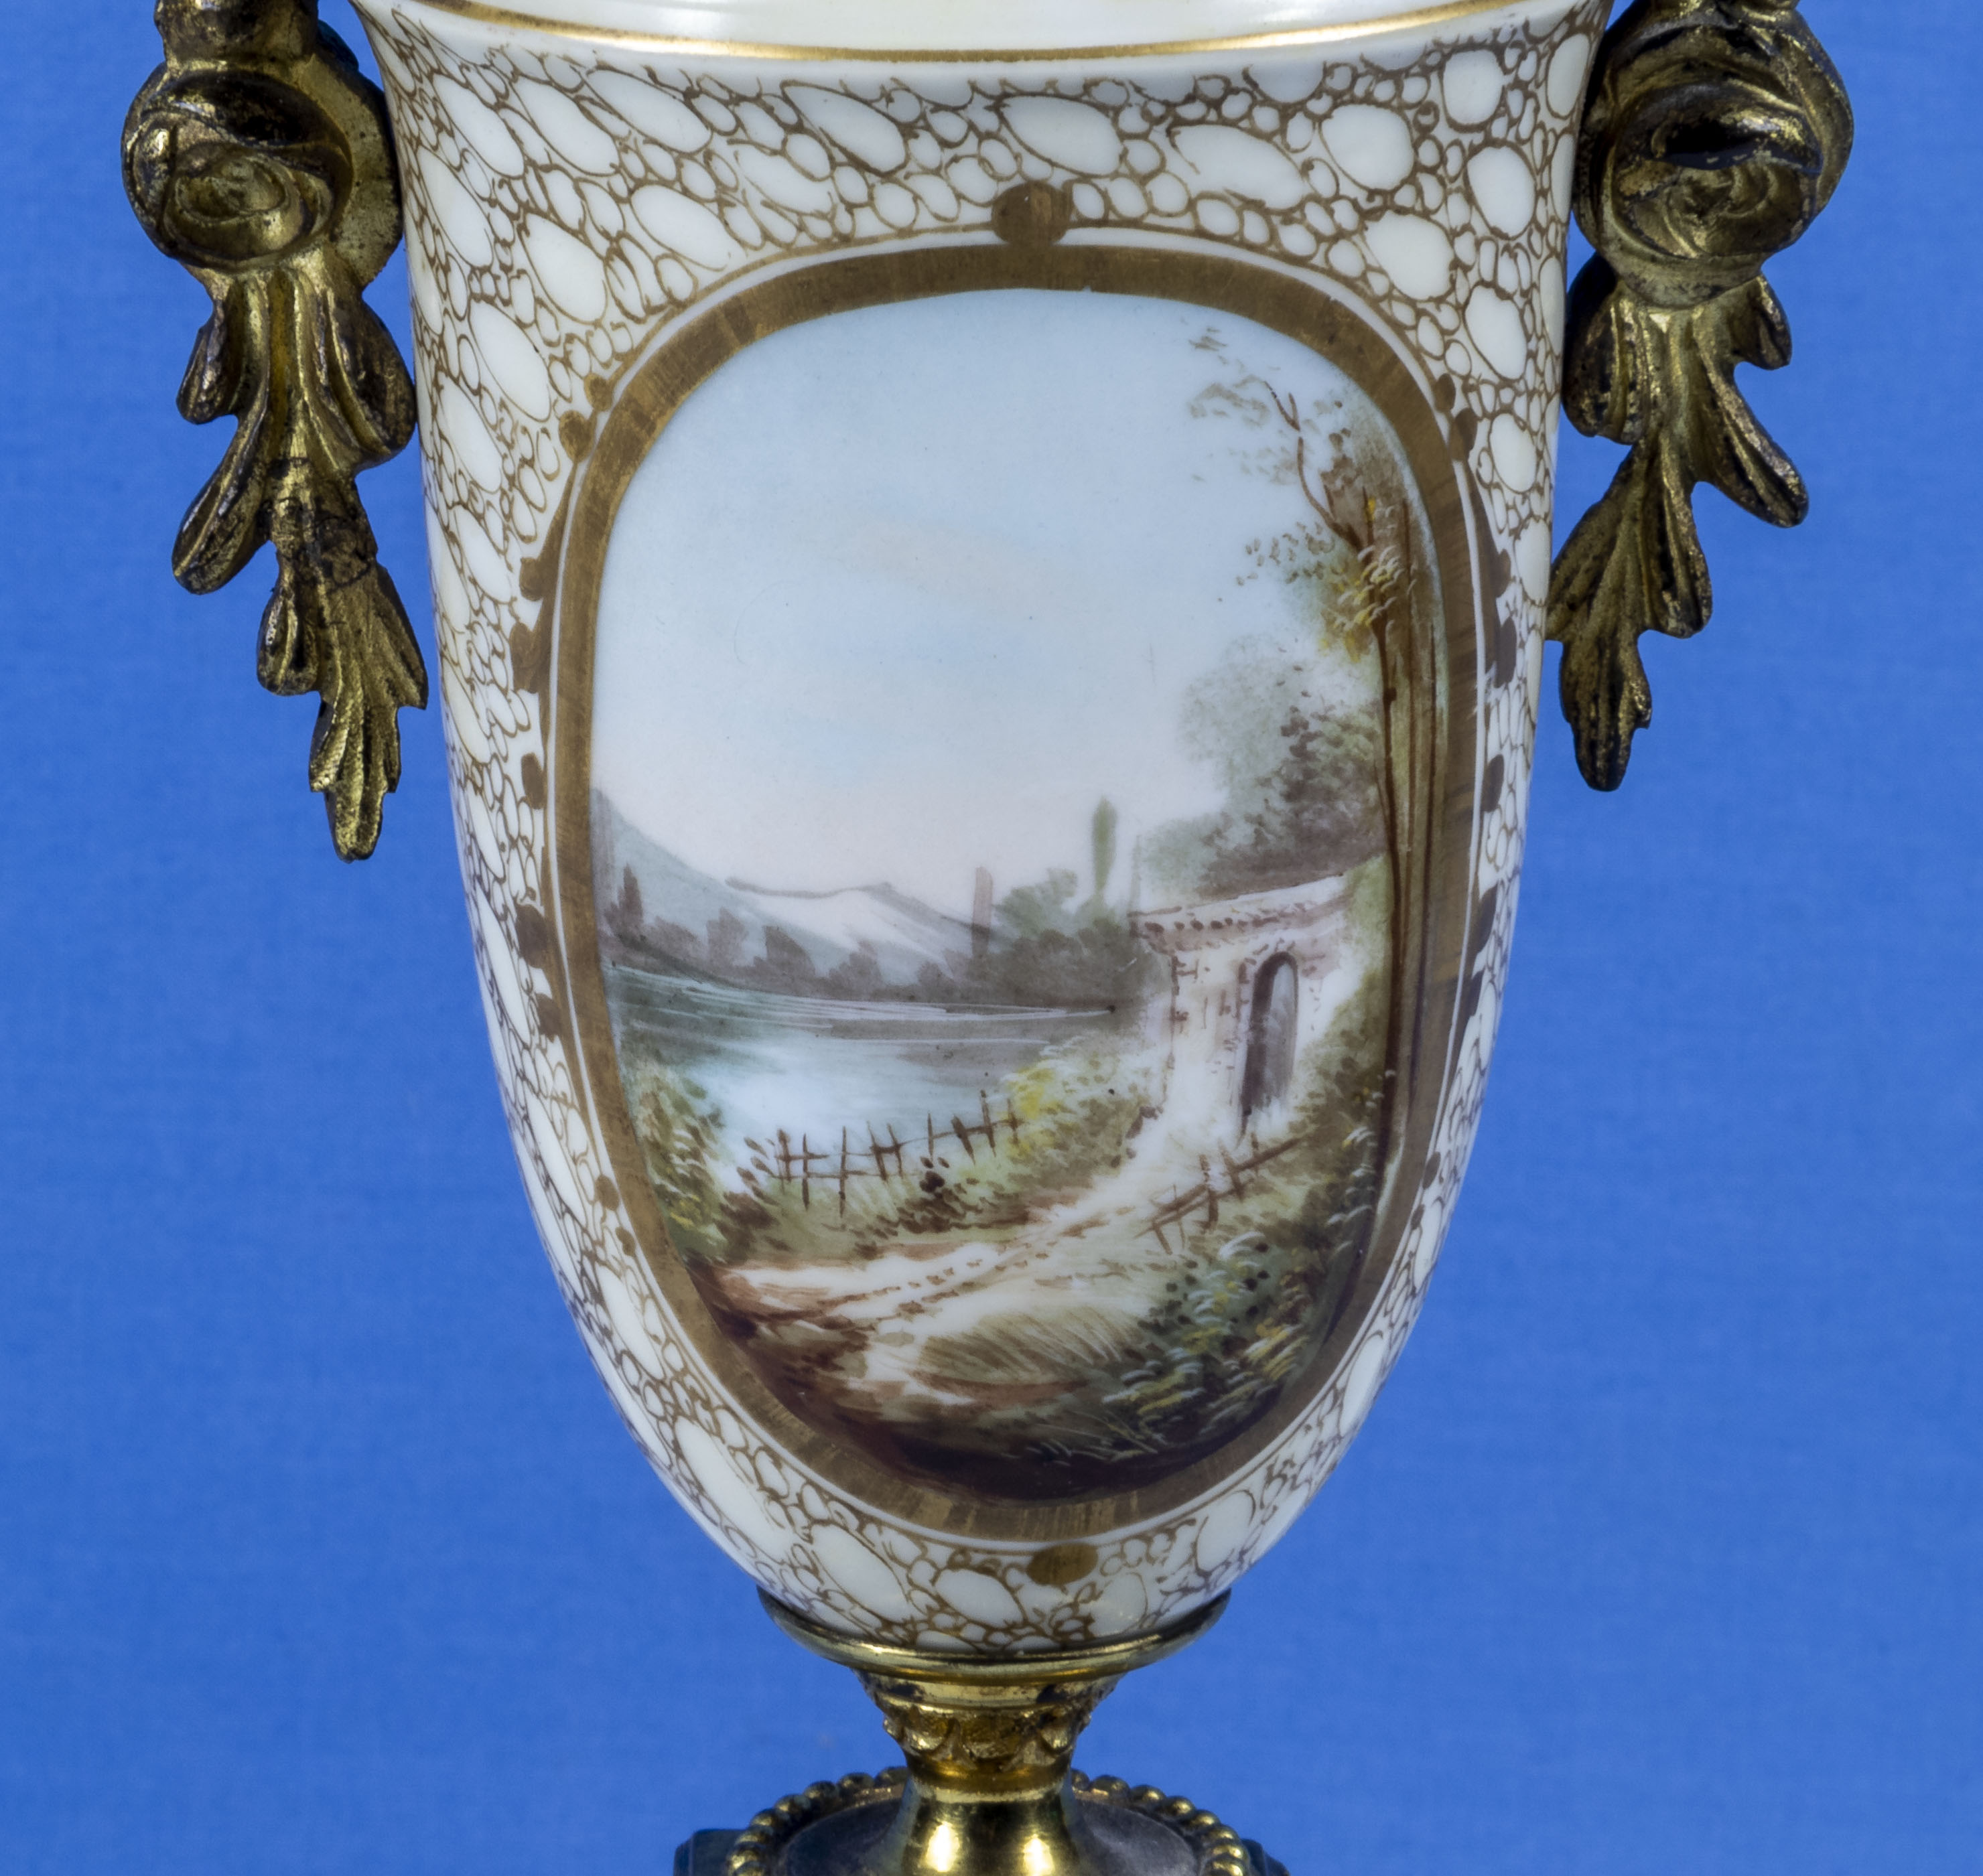 Antique French ormolu Serves vase - Image 5 of 7